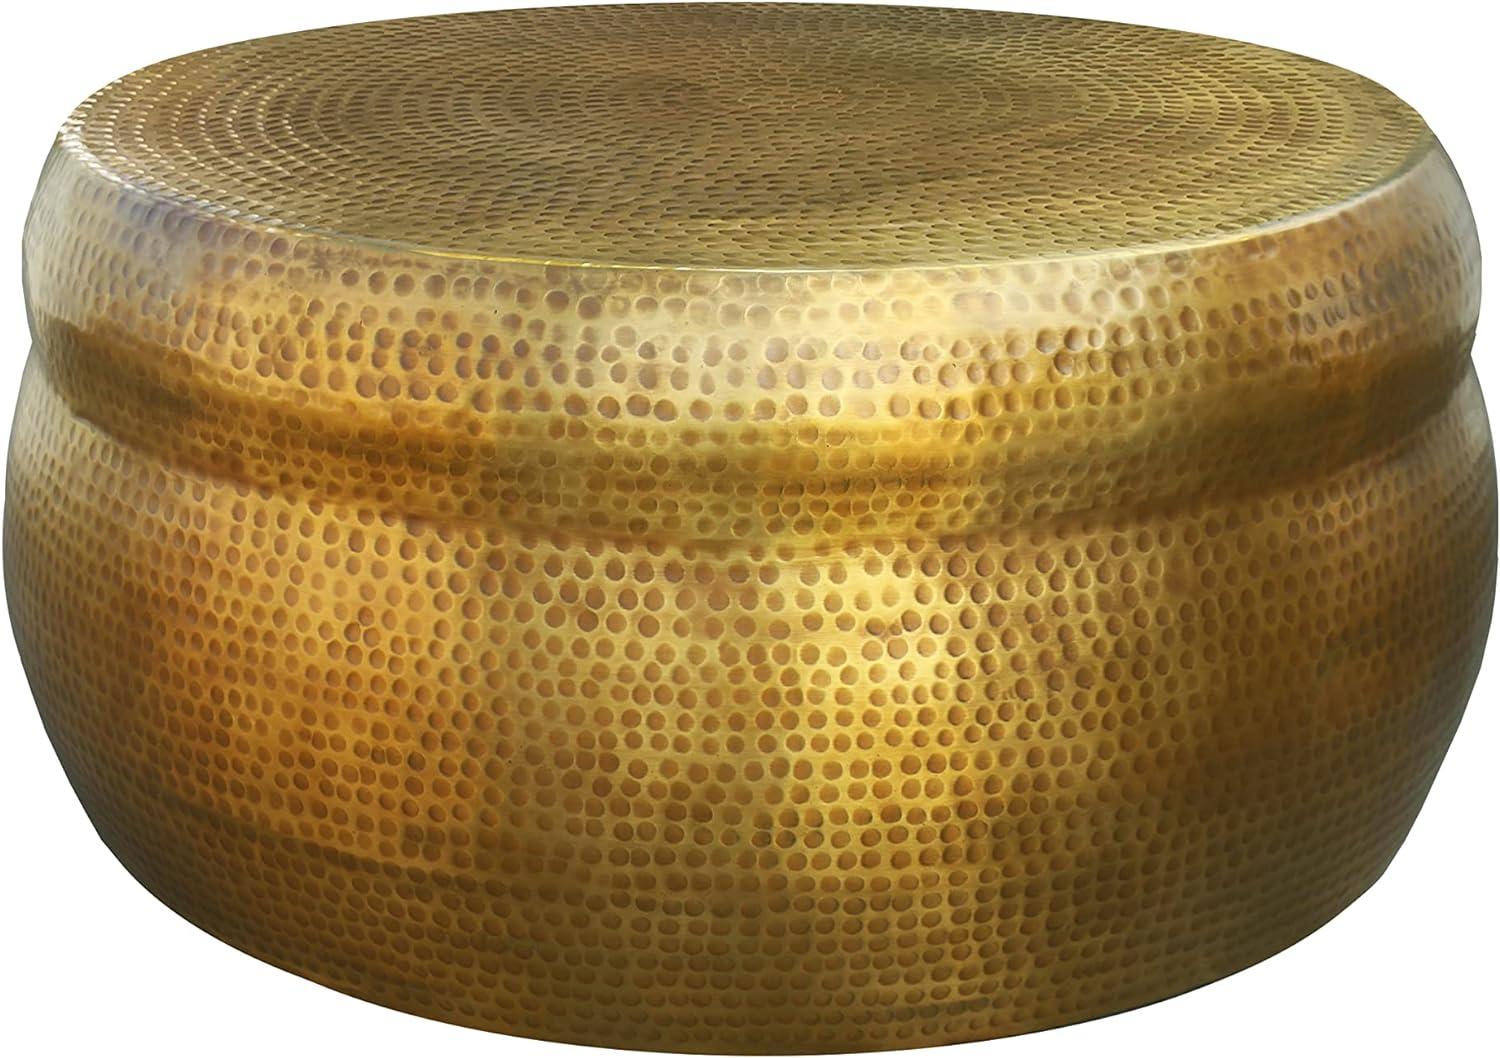 32" Artisanal Antique Brass Round Drum Coffee Table with Storage